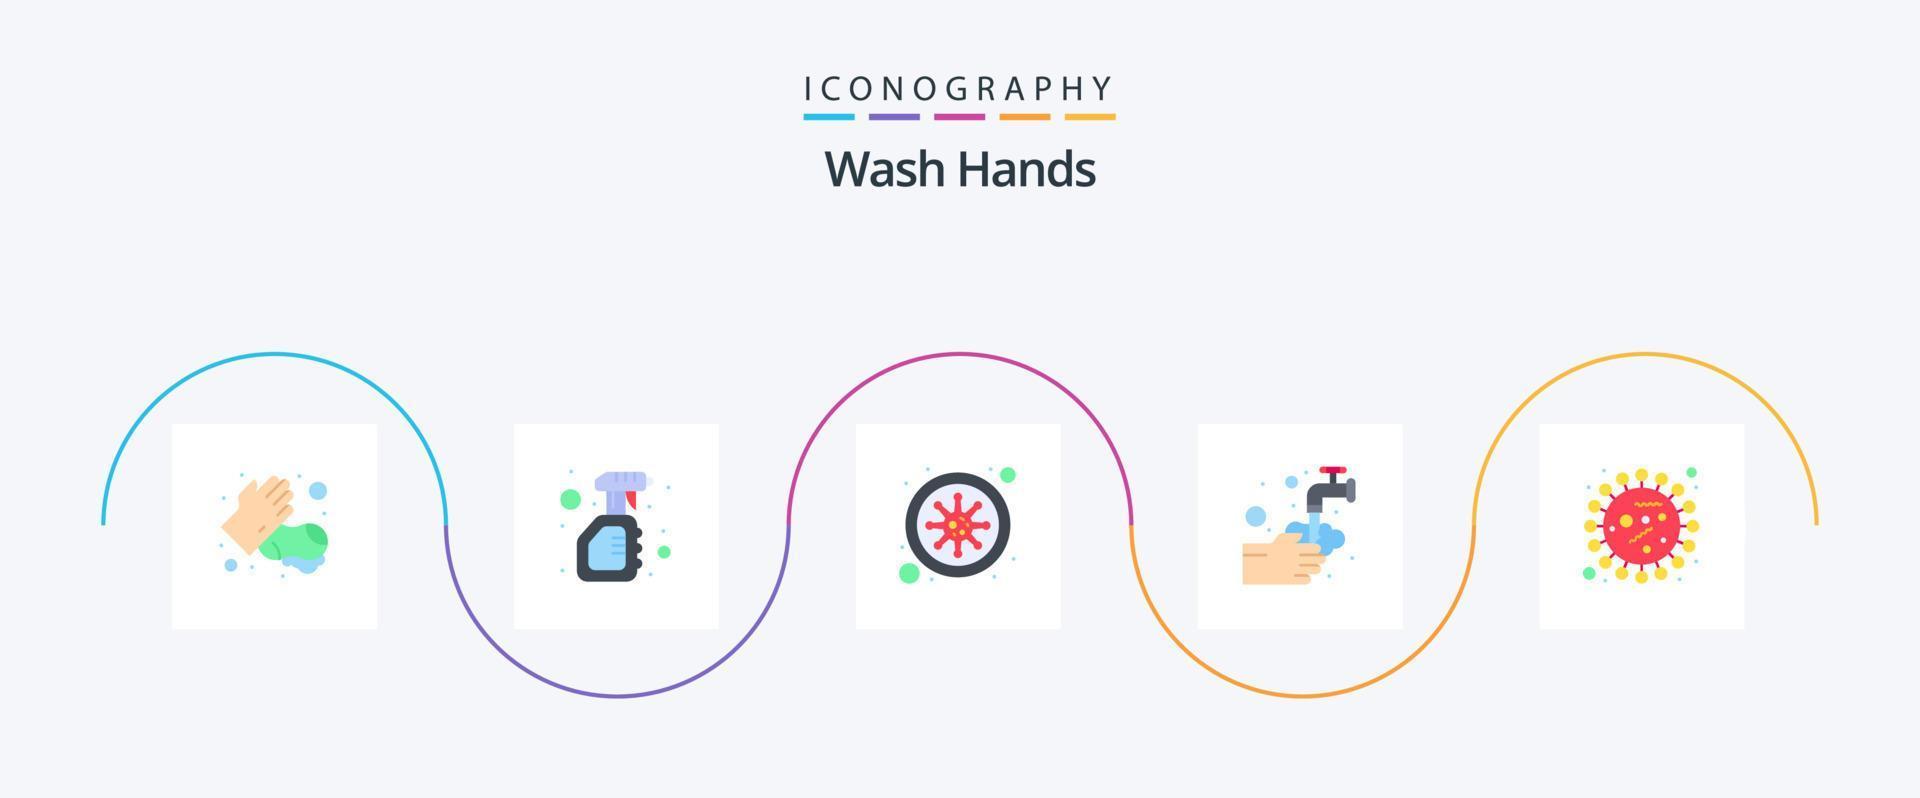 lave as mãos flat 5 icon pack incluindo bolha. lavando. vírus. médico. sangue vetor